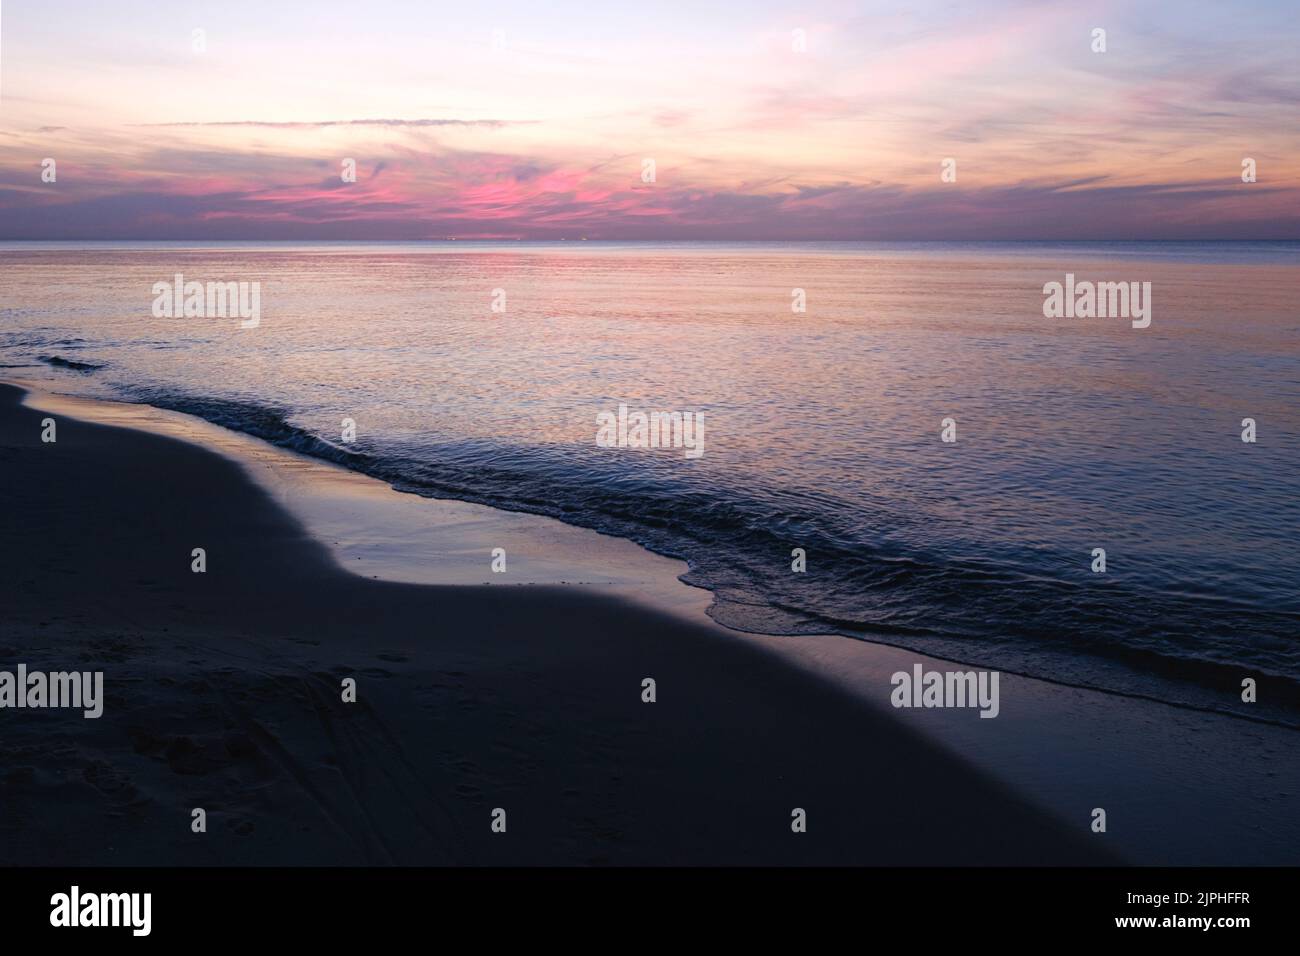 Baltic sea sunset sky, silver purple colors of sea calm water. Romantic beach landscape. Stock Photo